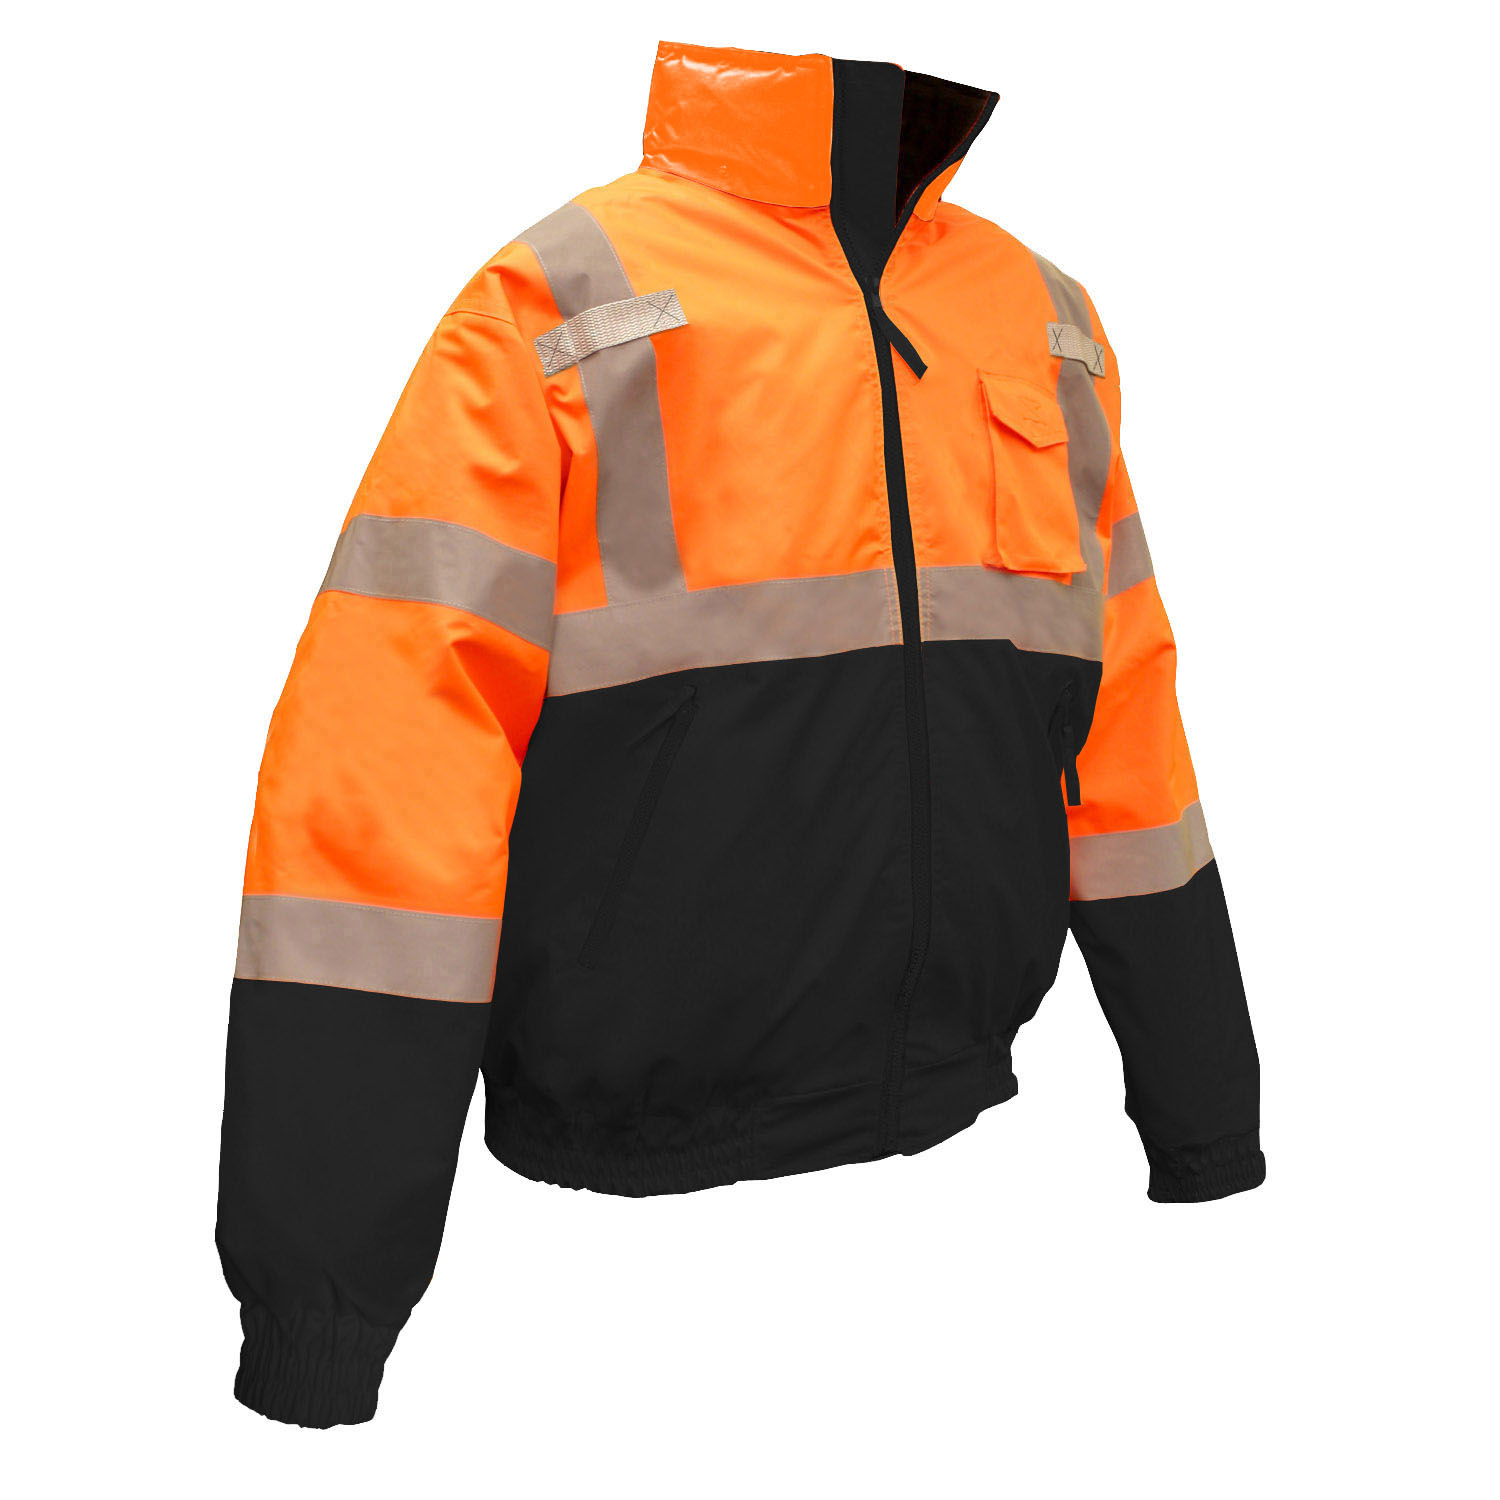 Radwear SJ110B Class 3 Two-In-One Hi-Viz Orange Safety Jacket 345 ...